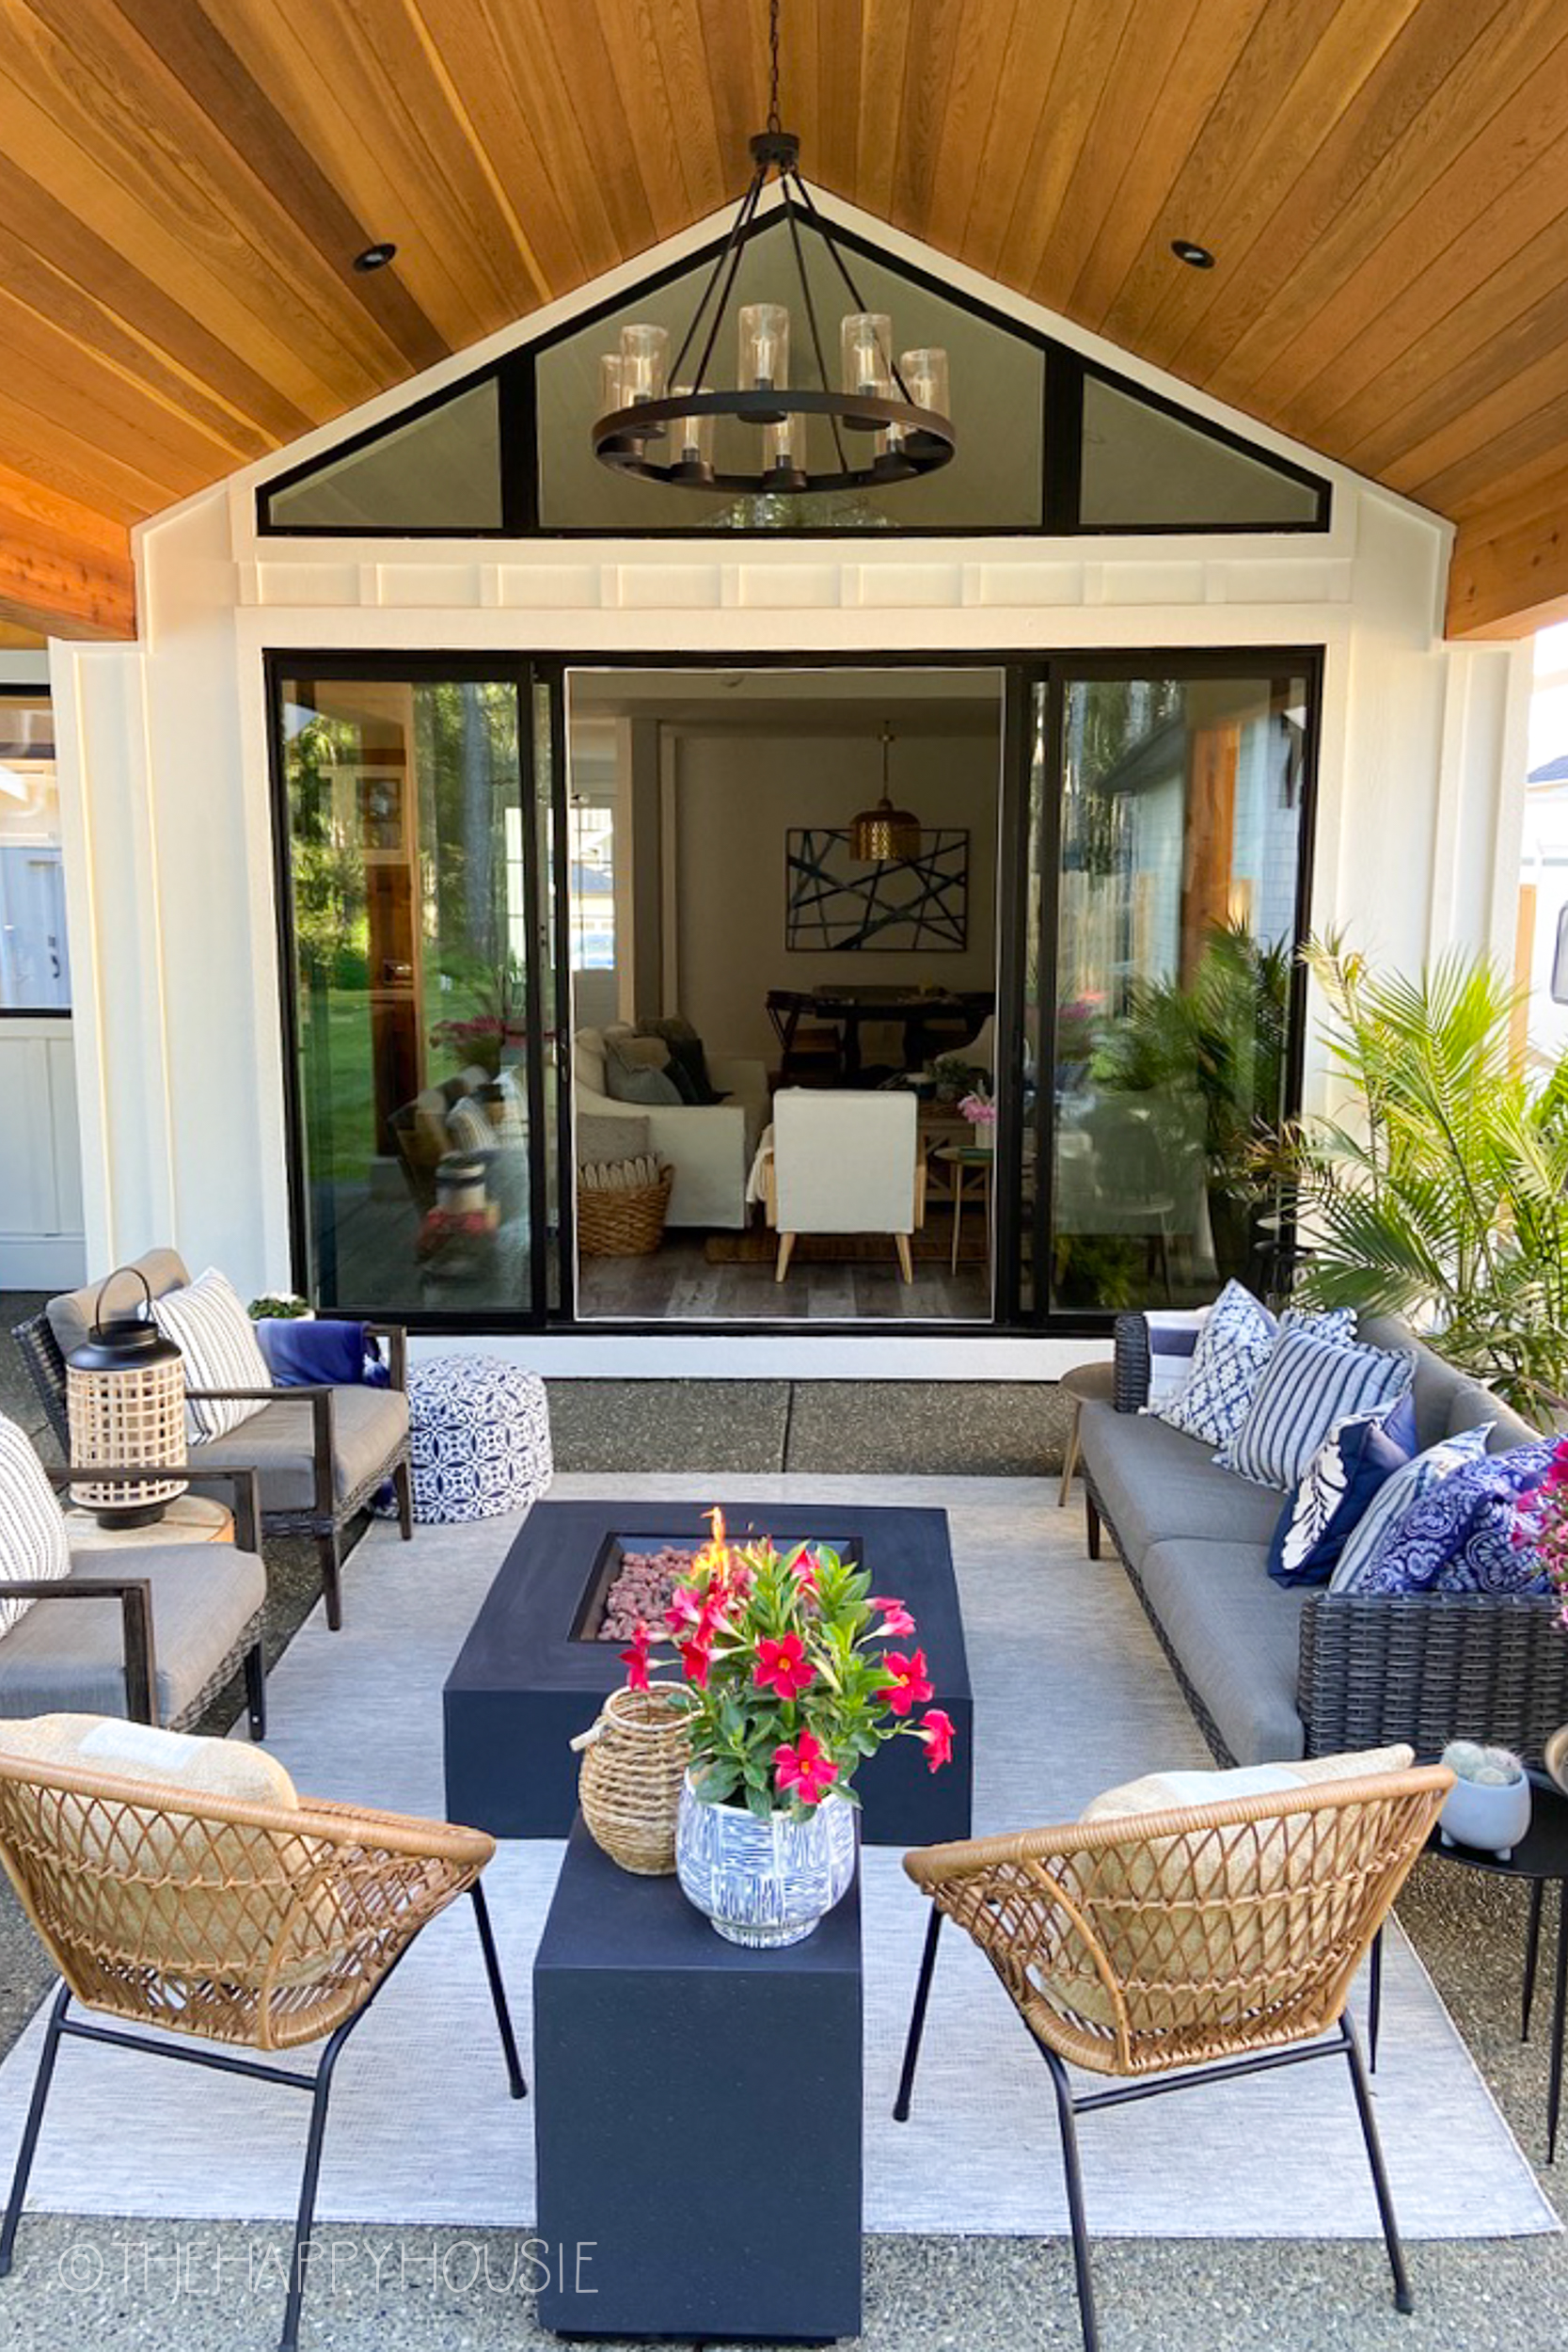 https://www.thehappyhousie.com/wp-content/uploads/2021/06/backyard-patio-decor-summer-outdoor-decorating-ideas-37.jpg